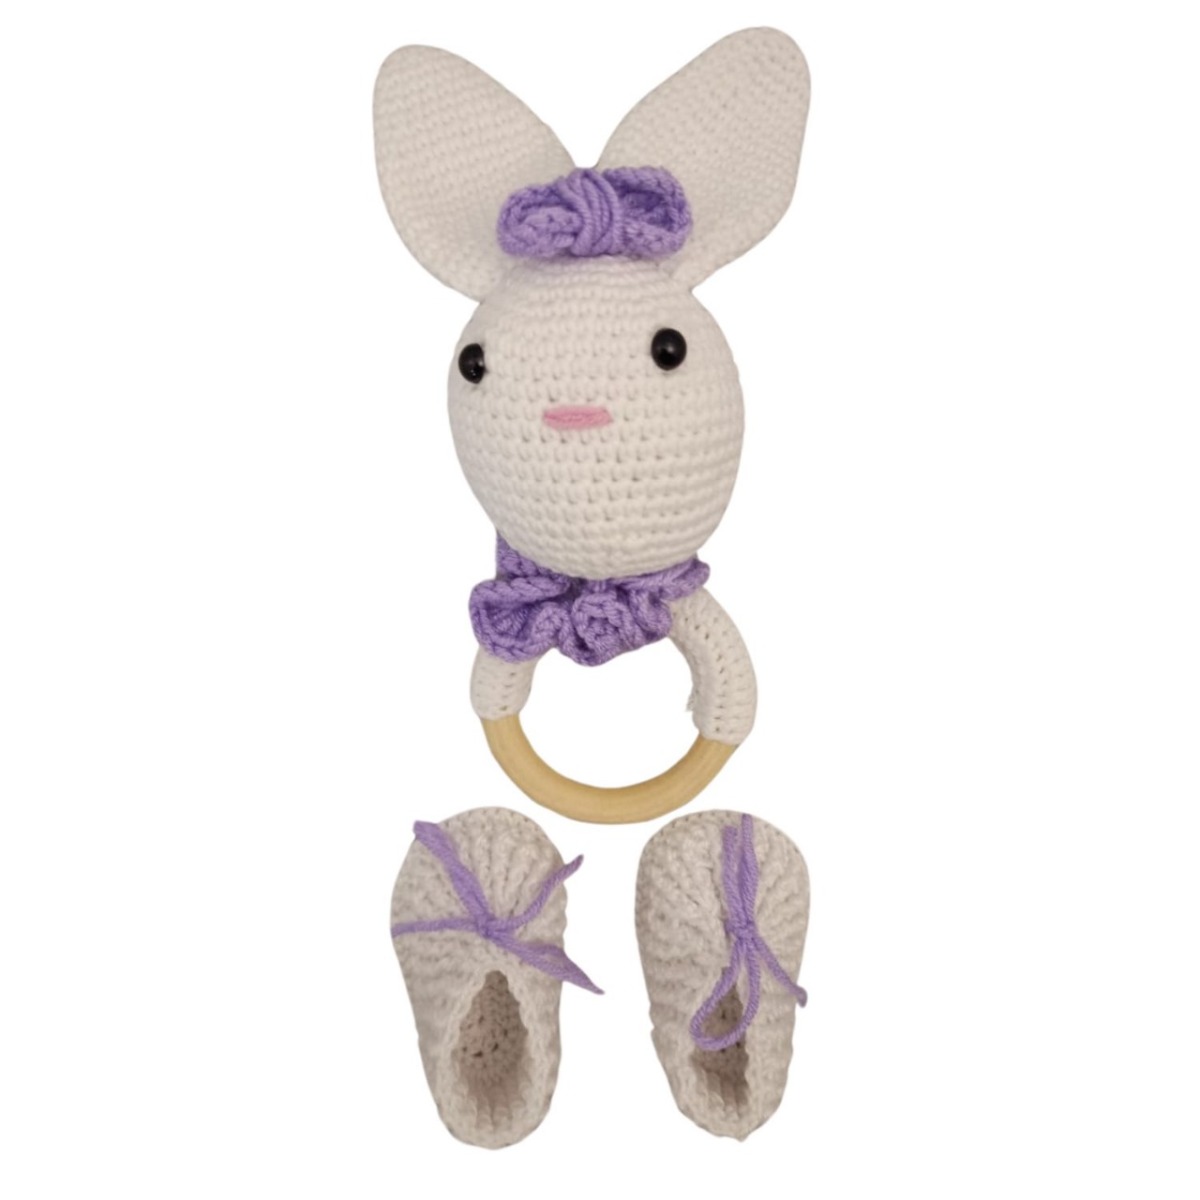 Pikkaboo - Heavenly Hugs Miss Rabbit Crochet Teether, Booties, And Blanket Set | Pack of 3